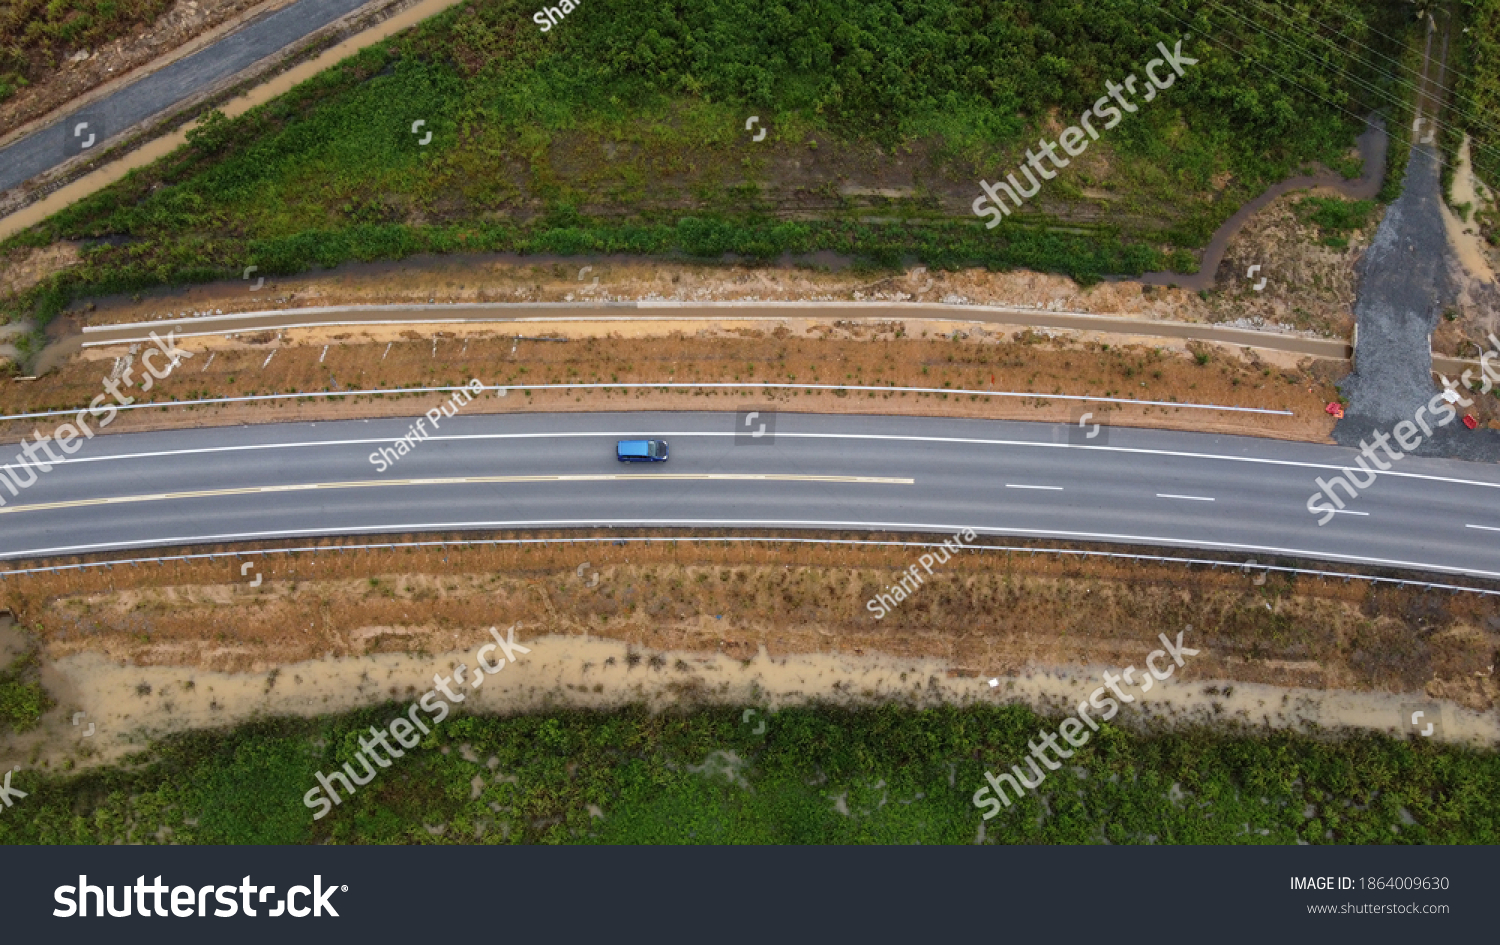 Pan borneo highway progress